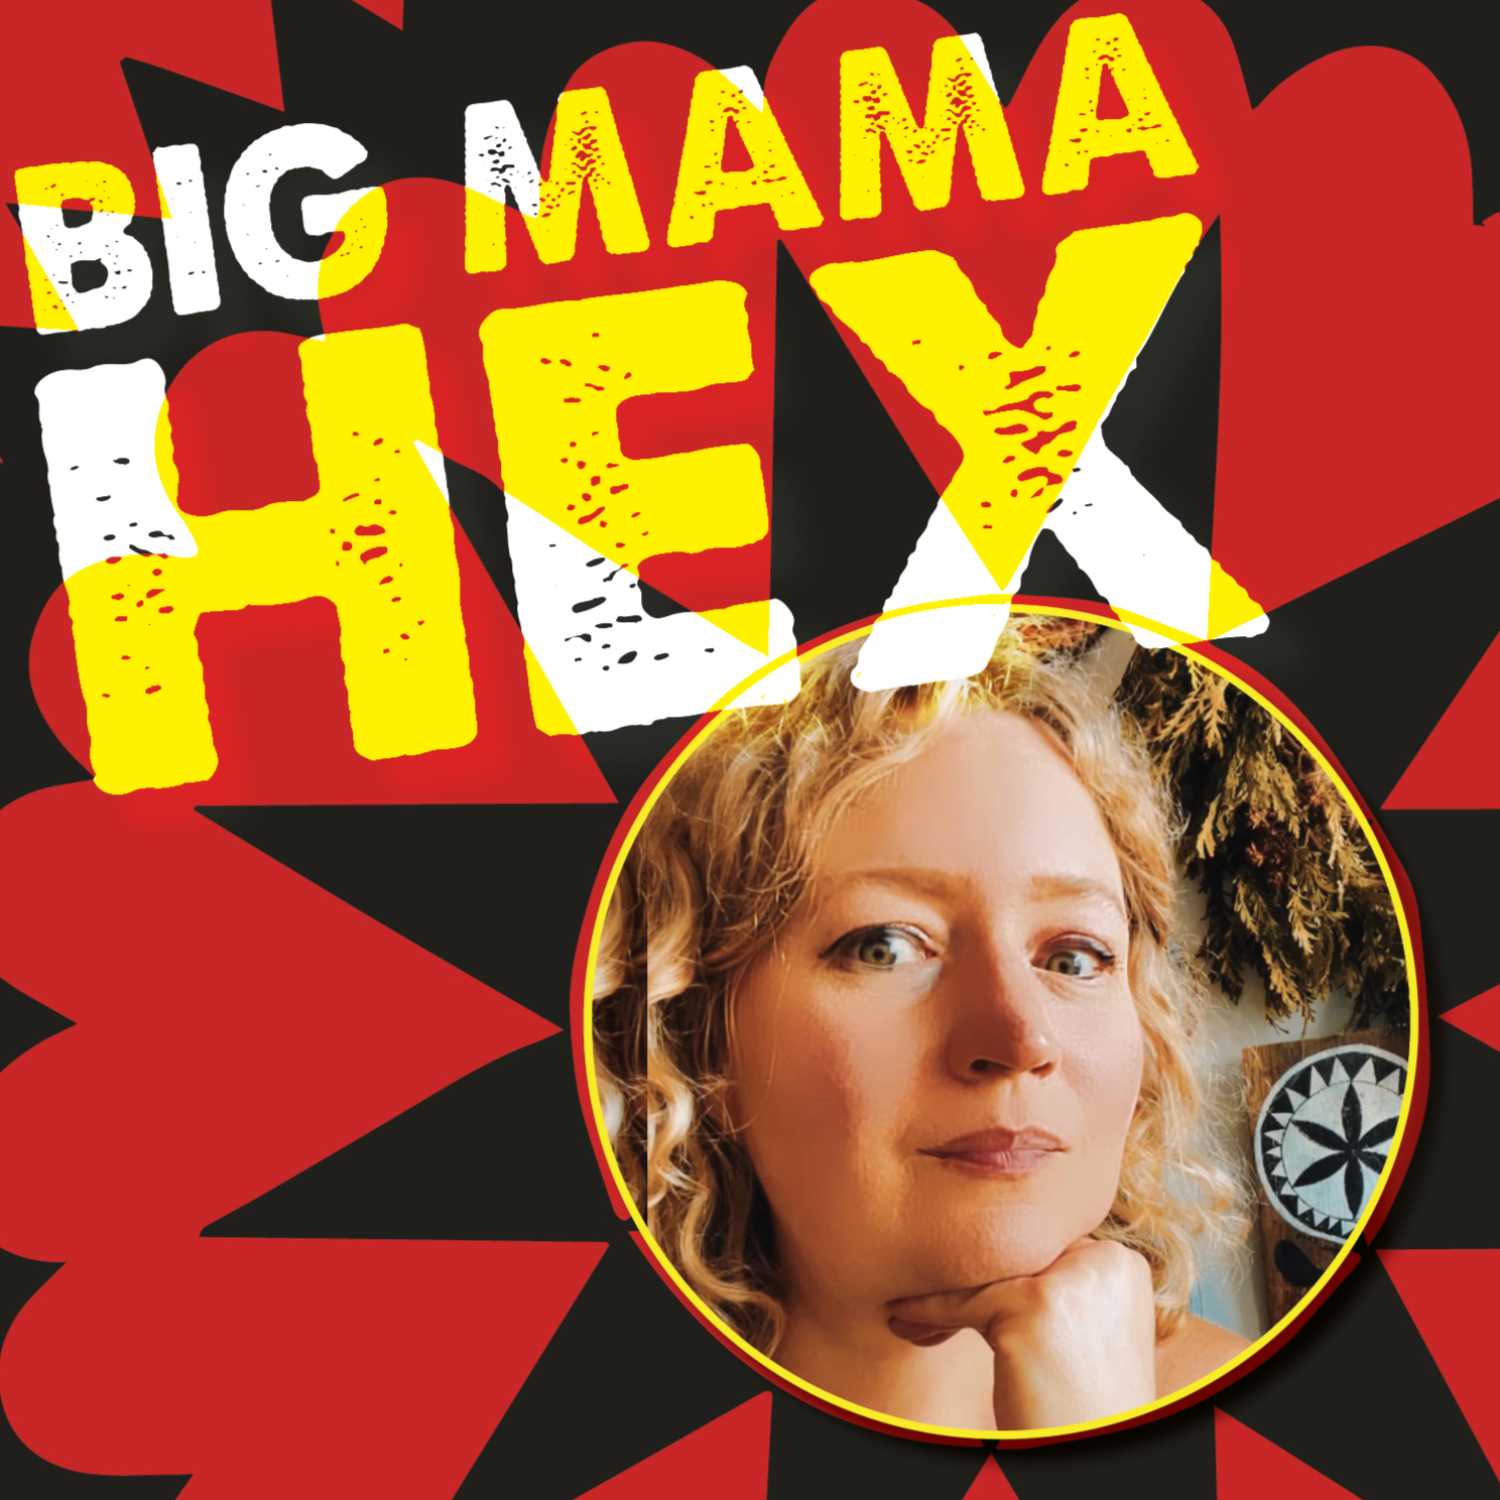 BIG MAMA HEX - "BEST OF" EPISODES